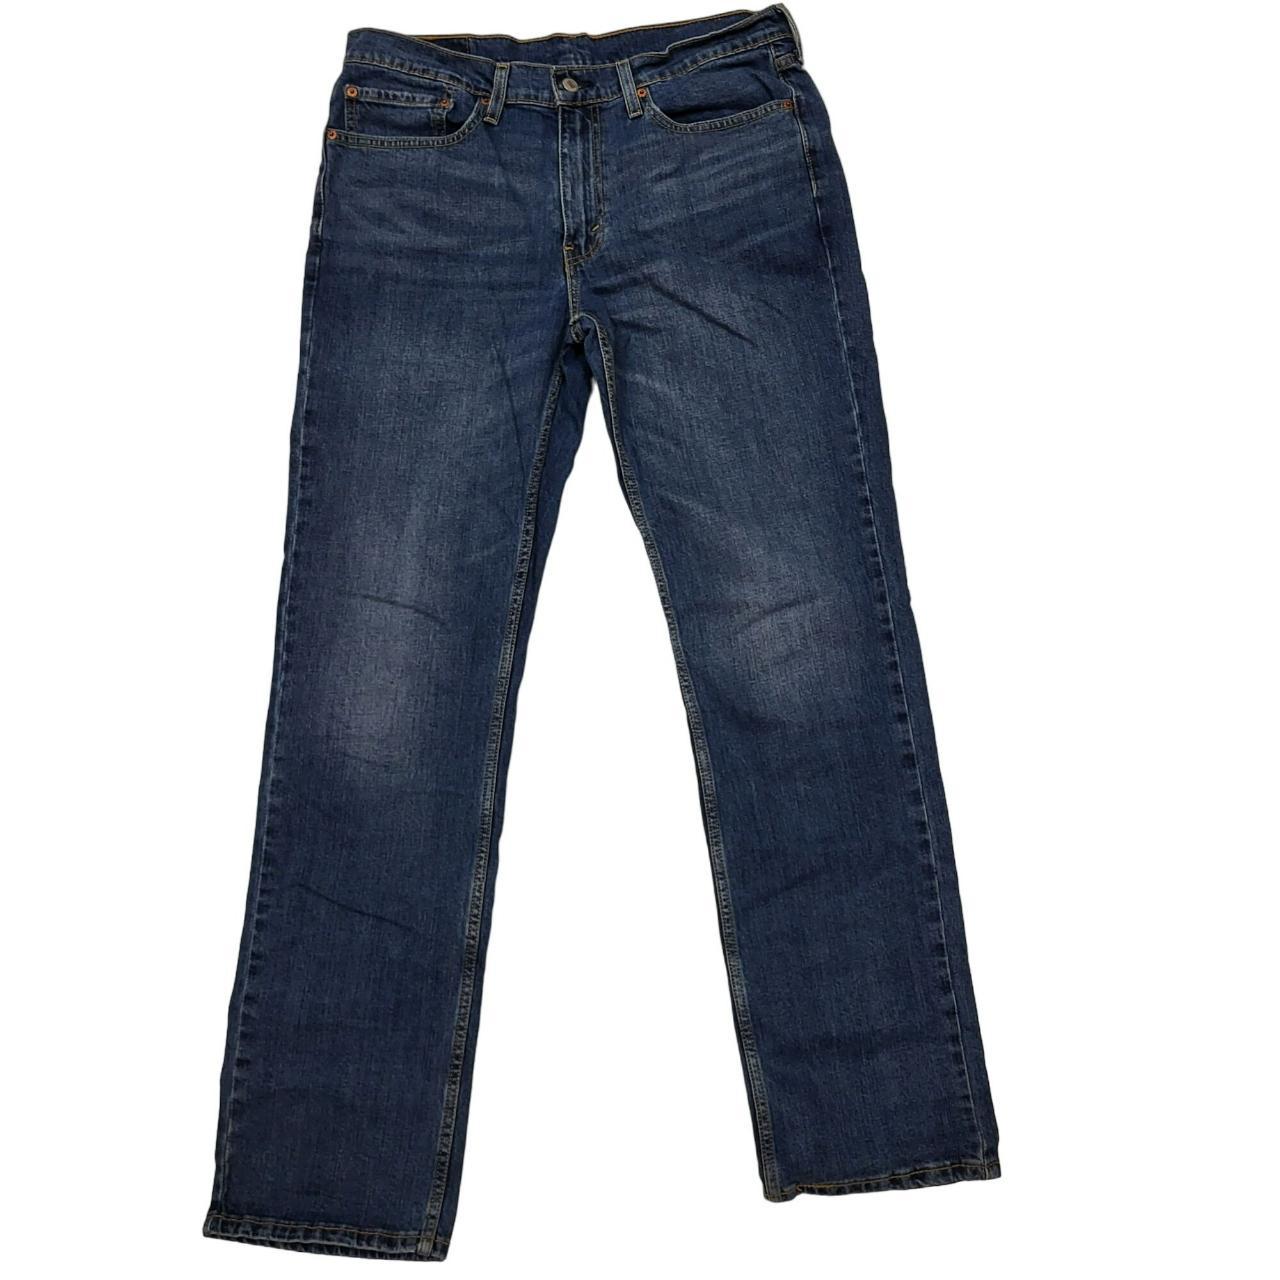 Levi's Straight Leg Blue Jeans Men's 34X 34 Medium... - Depop